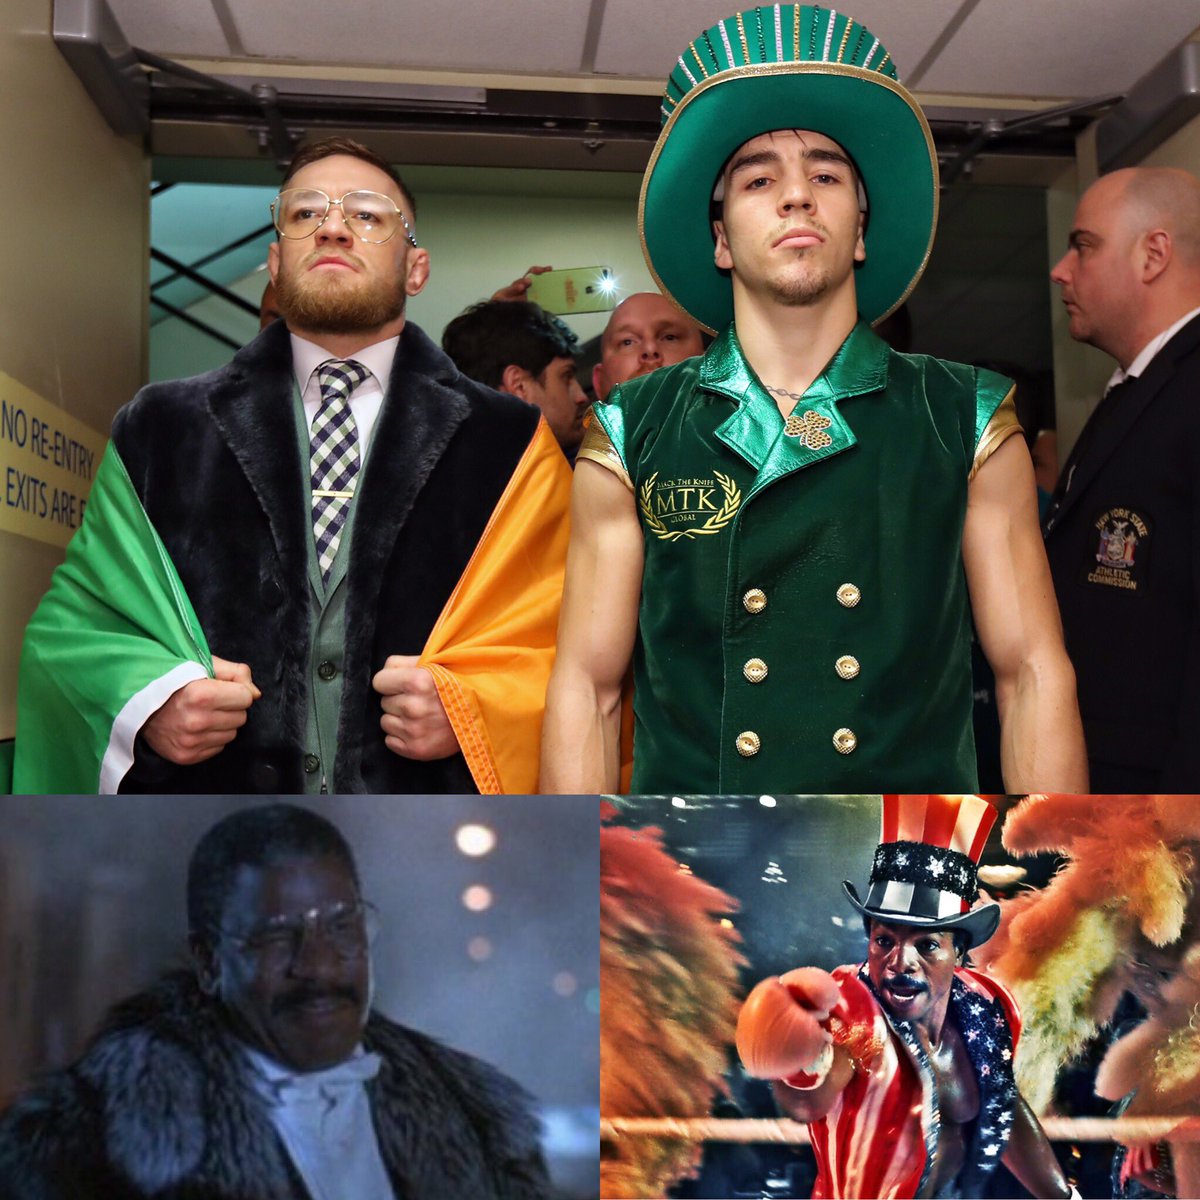 RT @mickconlan11: The Irish George Washington Duke & Apollo Creed @TheNotoriousMMA https://t.co/znj2joHKuY